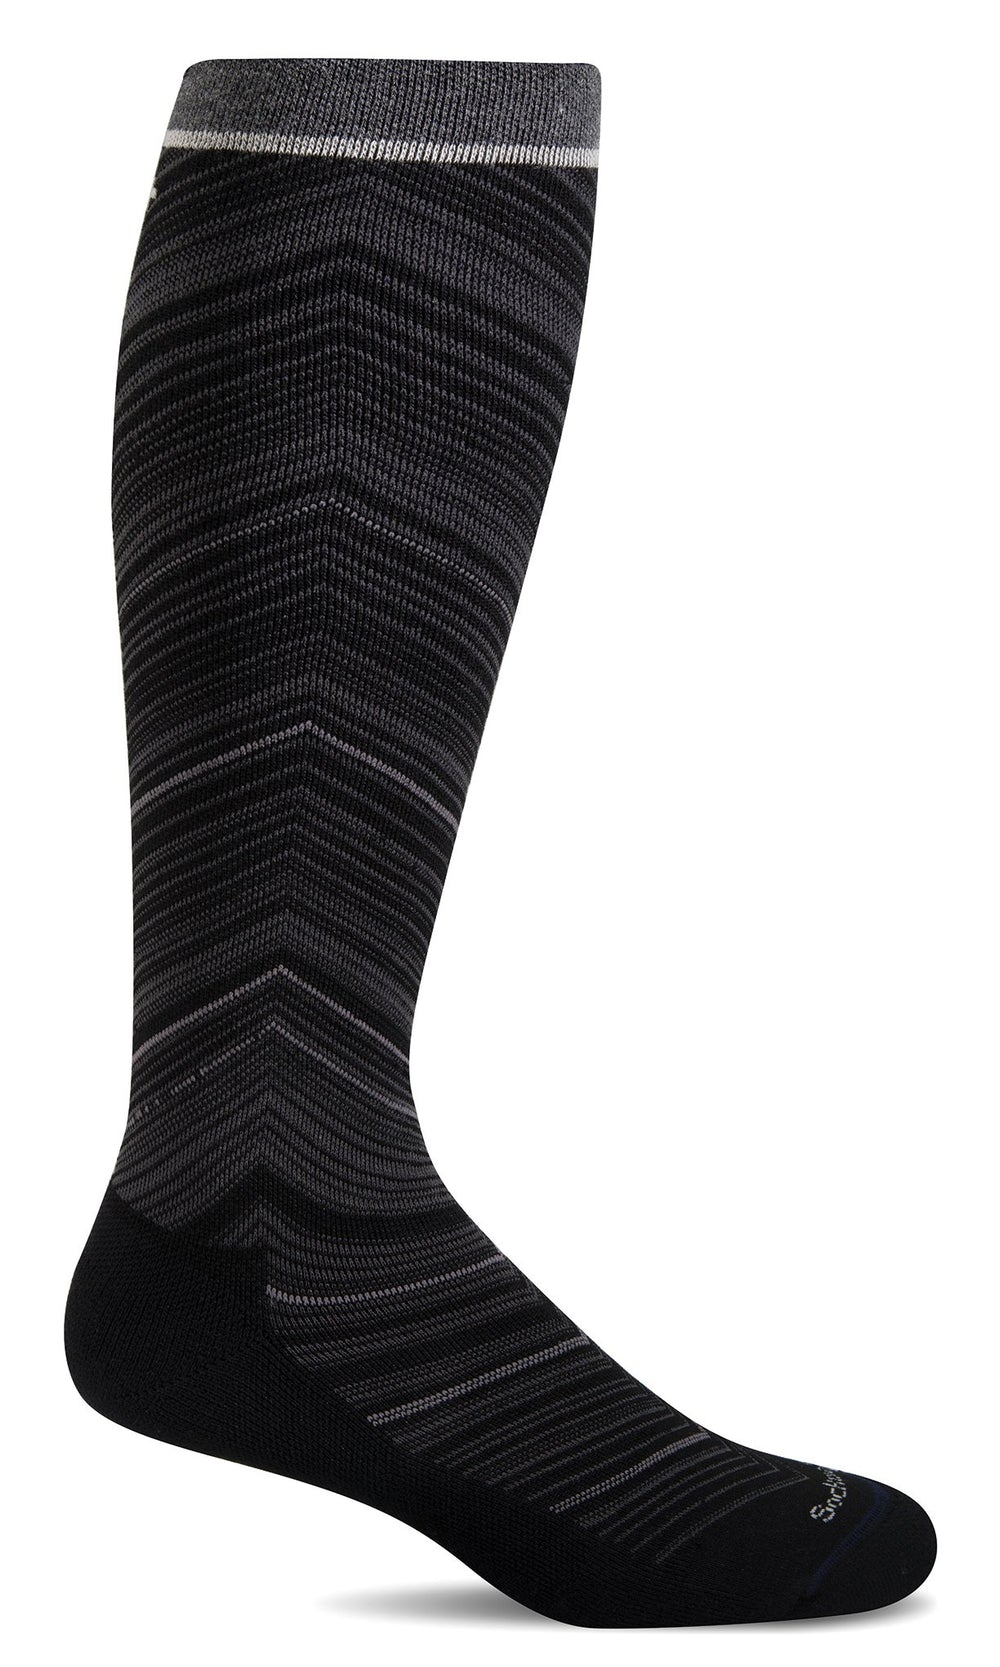 Sockwell Women's Compression Socks - WIDE CALF full flattery black